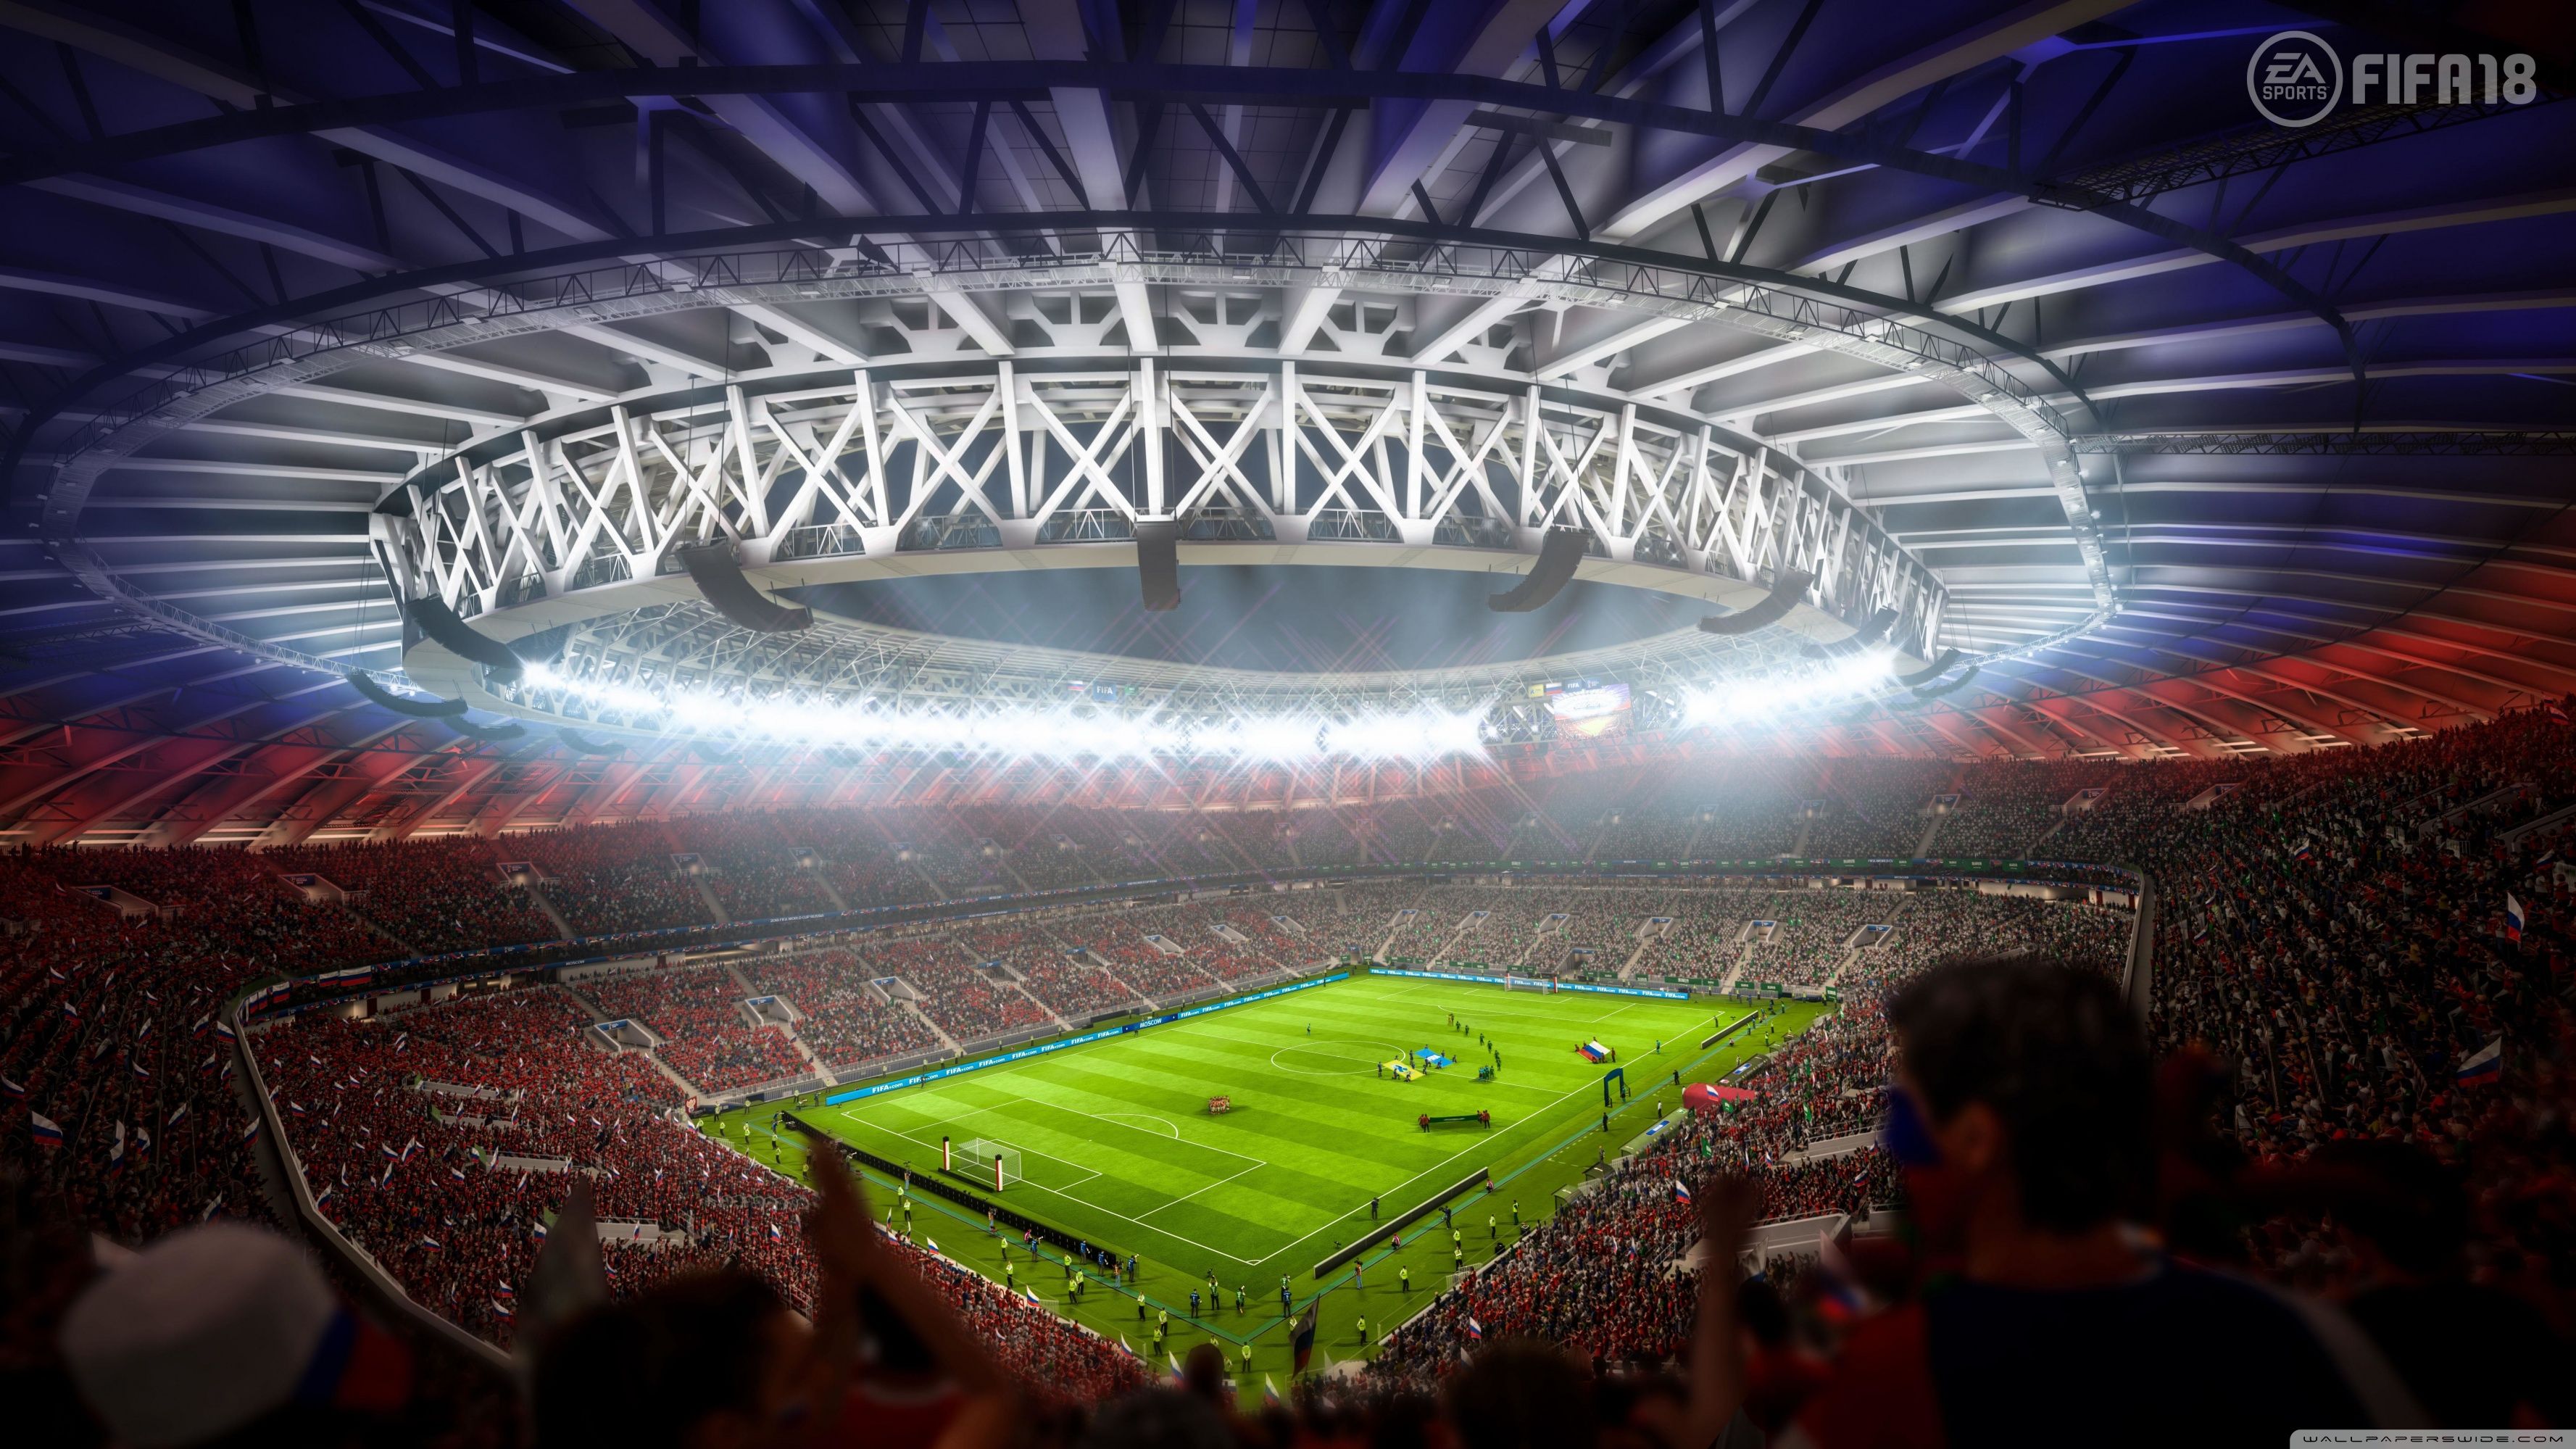 FIFA 18 Stadium Ultra HD Desktop Background Wallpaper for 4K UHD